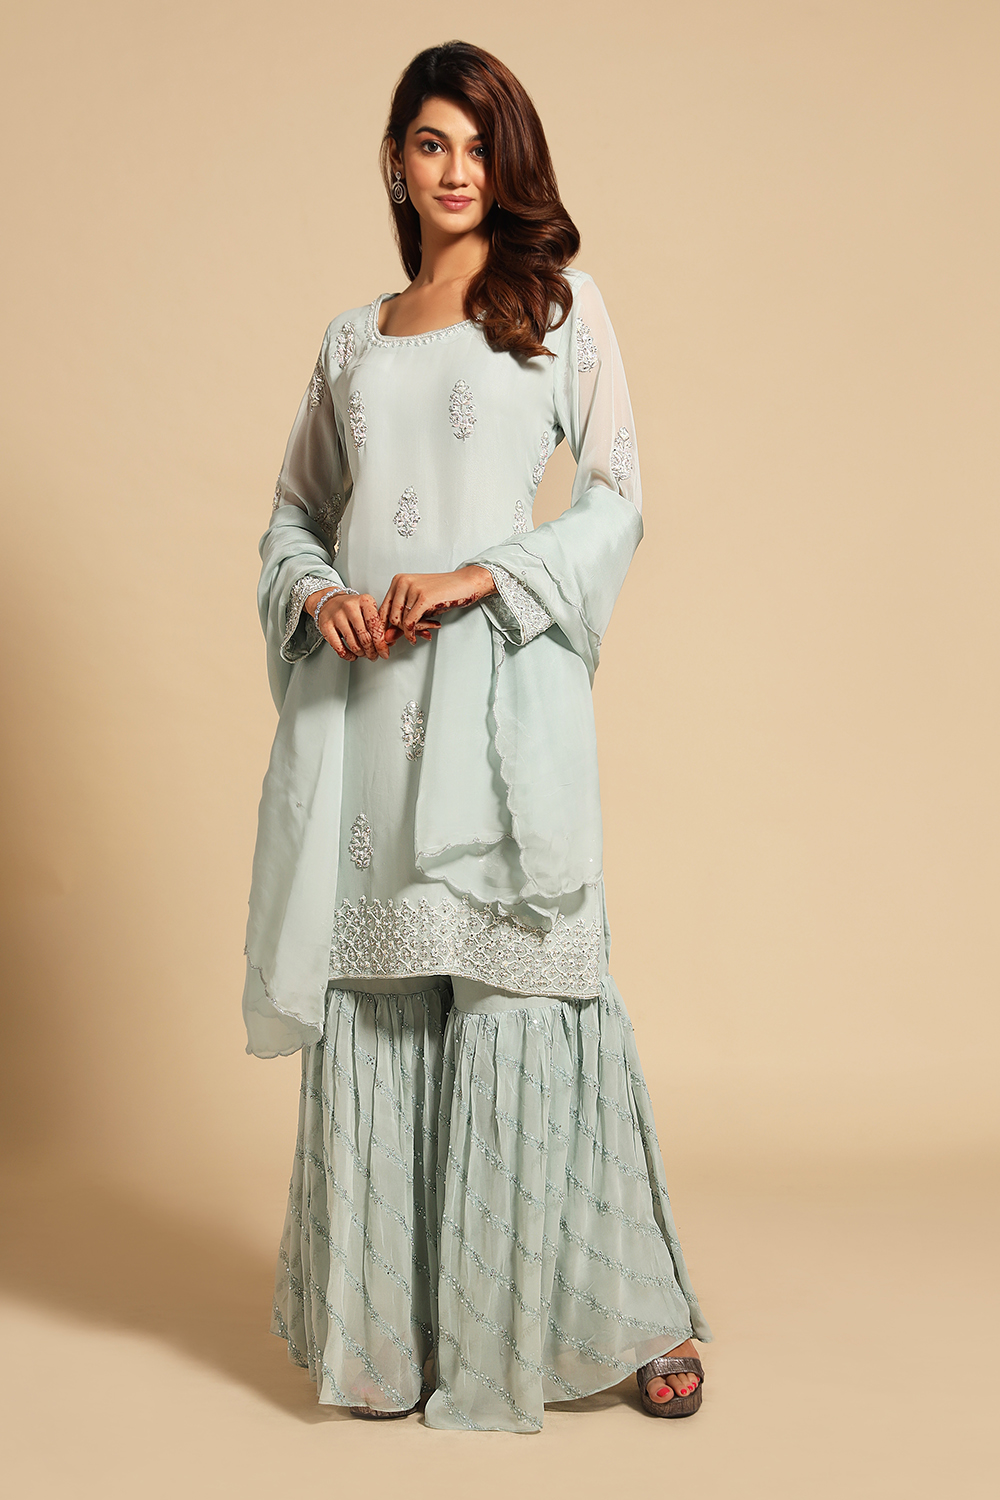 Calendula Georgette Embroidery Work Designer Heavy Salwar-Kameez Suit With Sharara  Pants | Exotic India Art